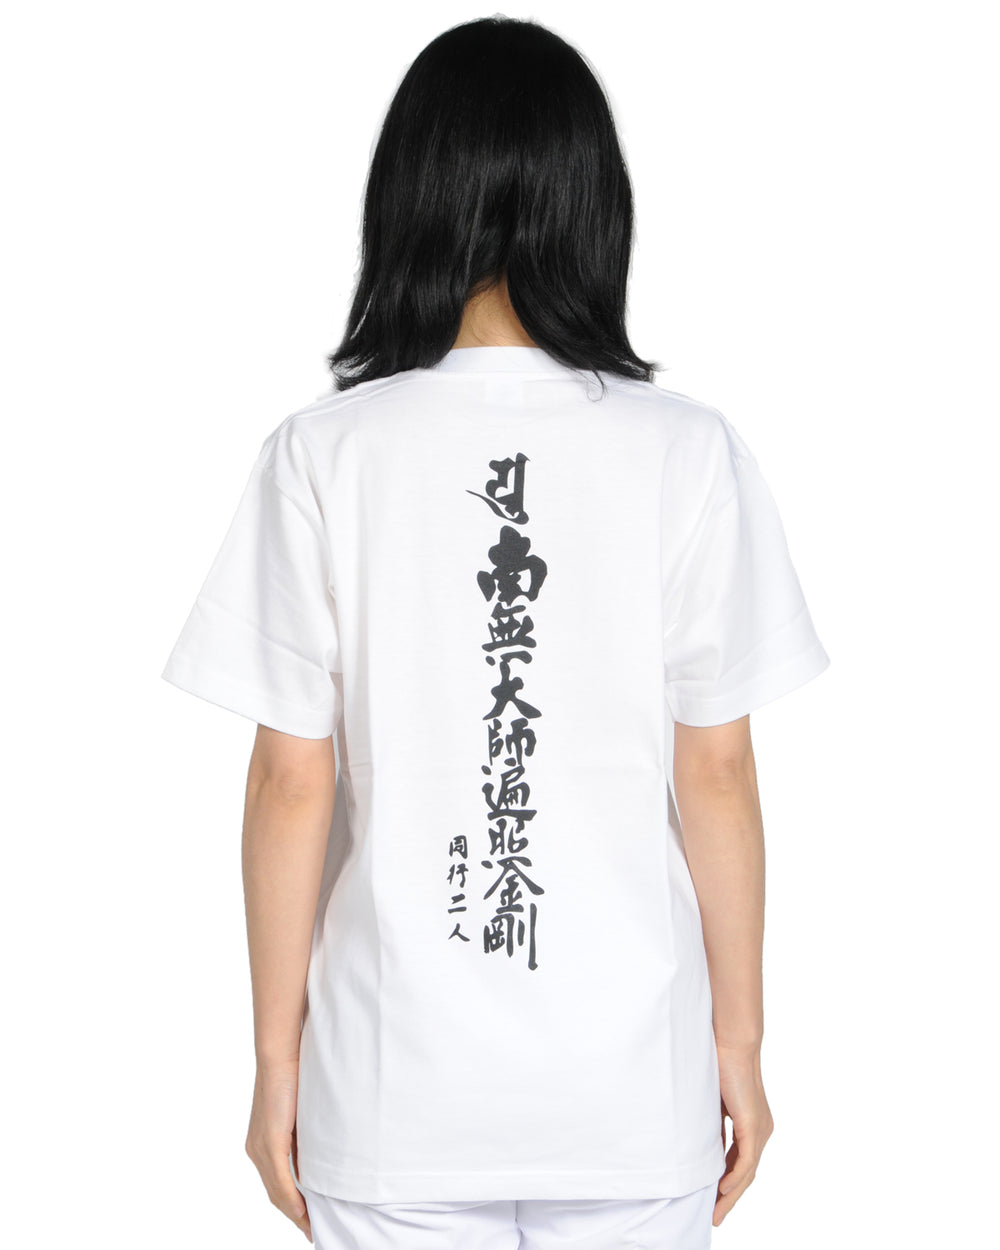 Pilgrimage T-shirt with Printed Phrases on the Back(Namu Daishi Henjō Kongō/南無大師遍照金剛)